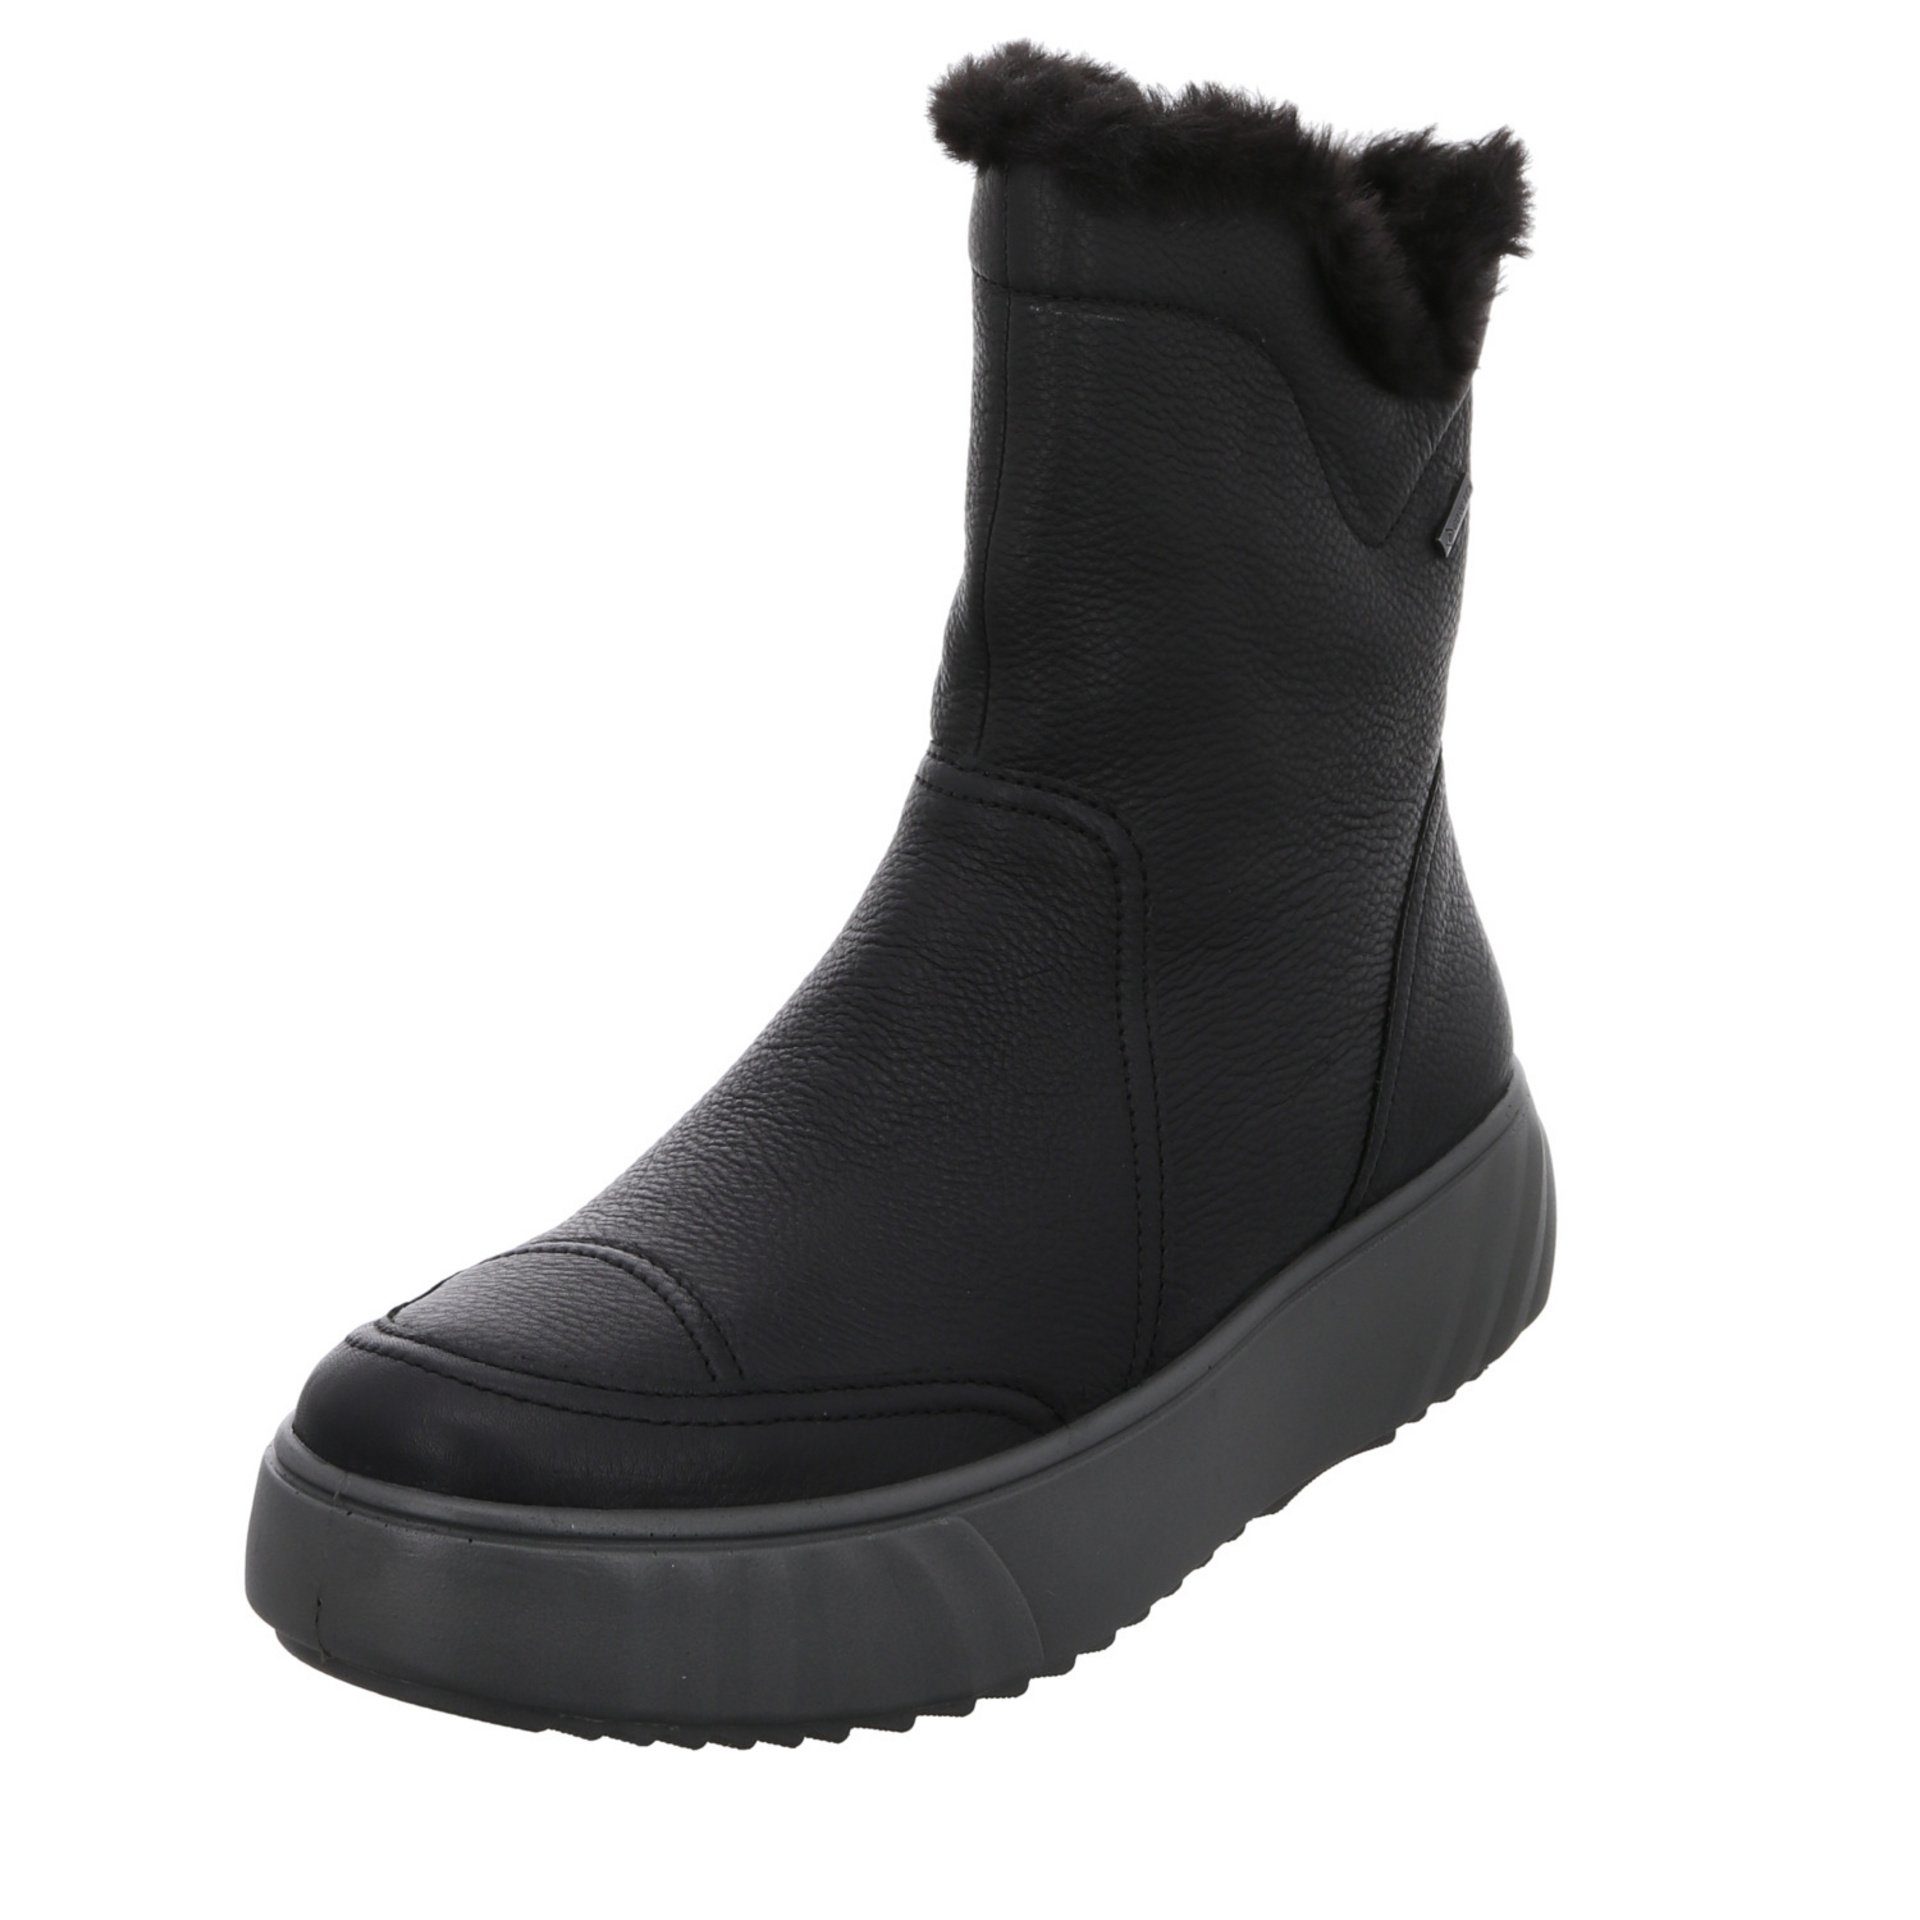 Ara Damen Stiefel Schuhe Monaco Boots Elegant Freizeit Stiefelette Glattleder schwarz 046943